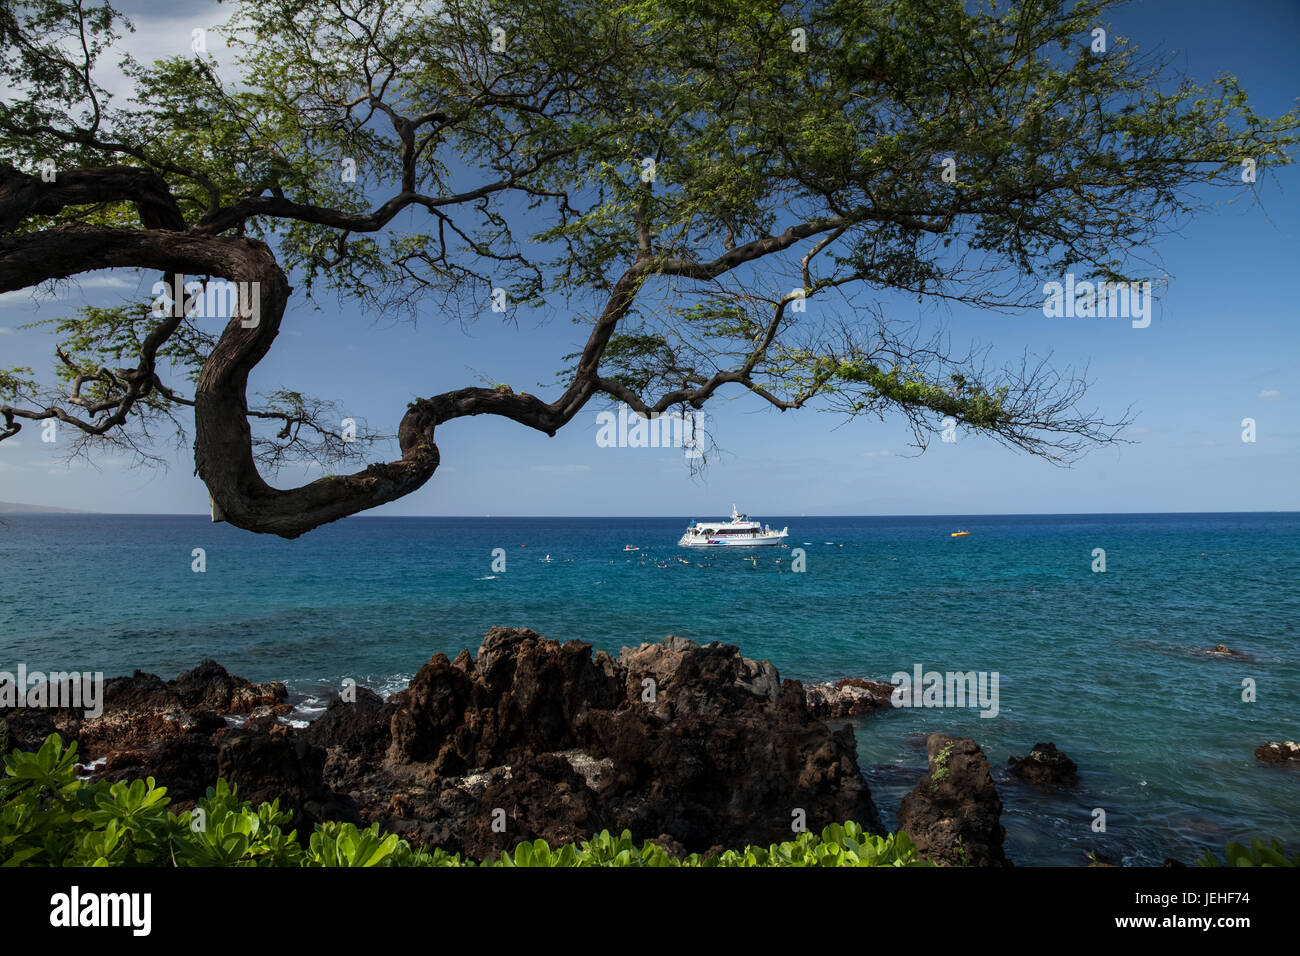 Snorkel boat off the shore; Wailea, Maui, Hawaii, United States of America Stock Photo